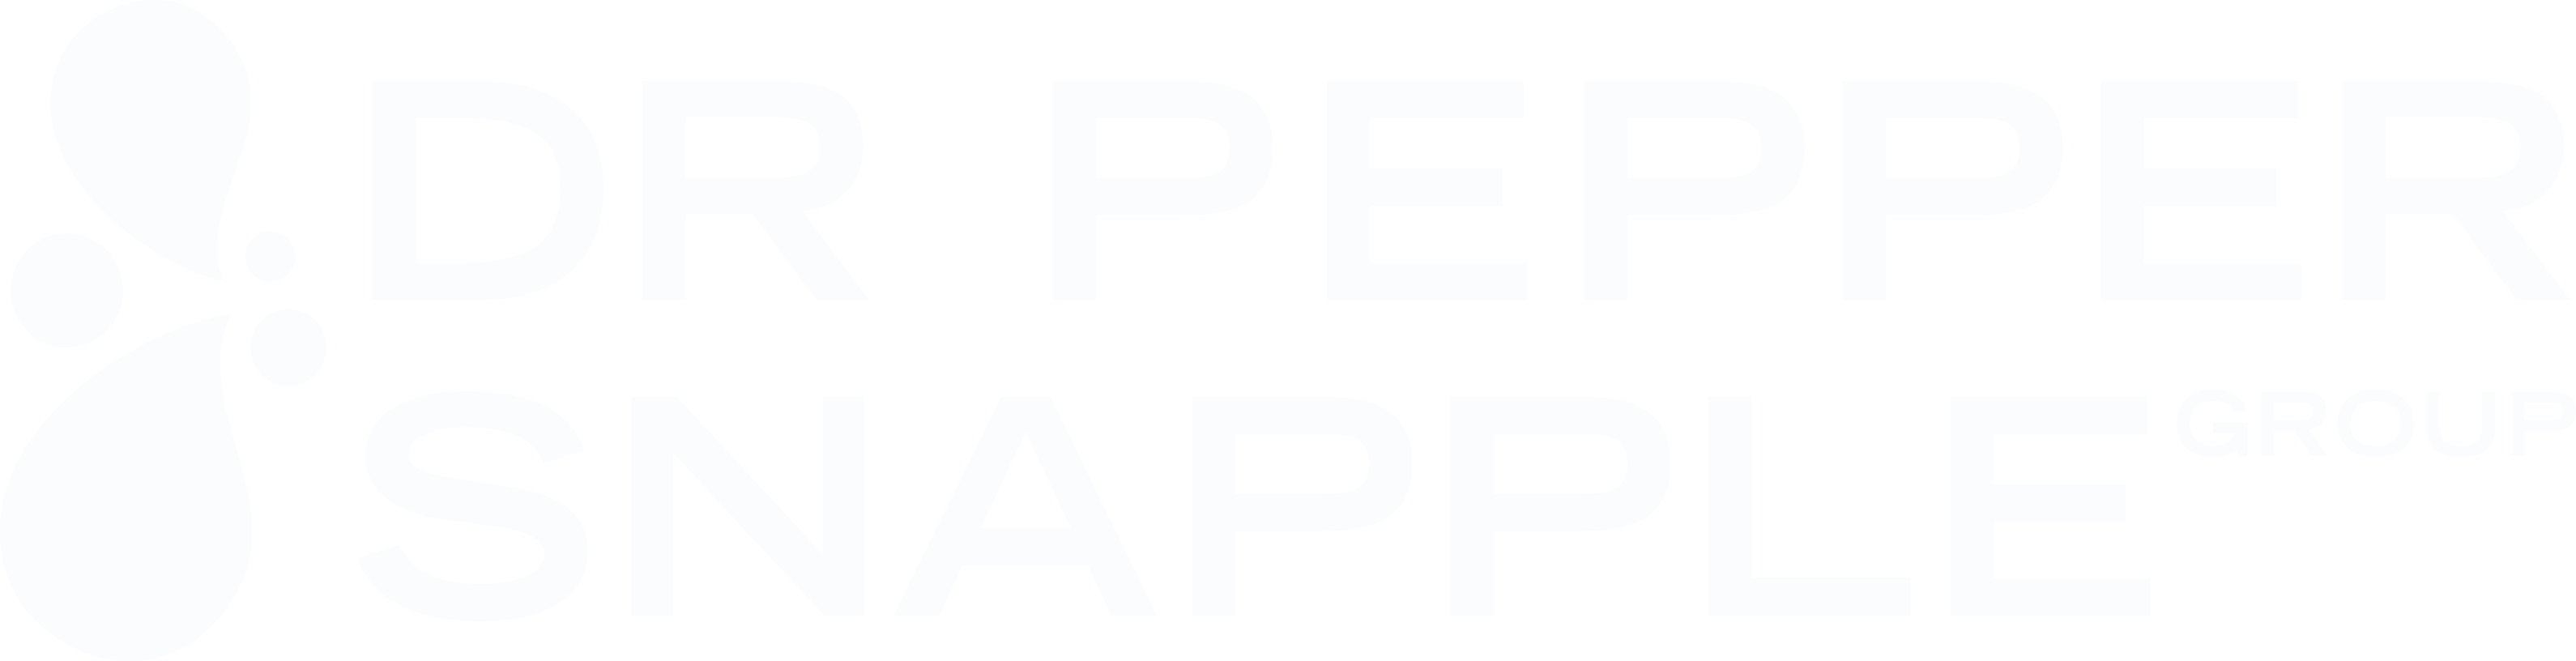 Dr_Pepper_Snapple_Group